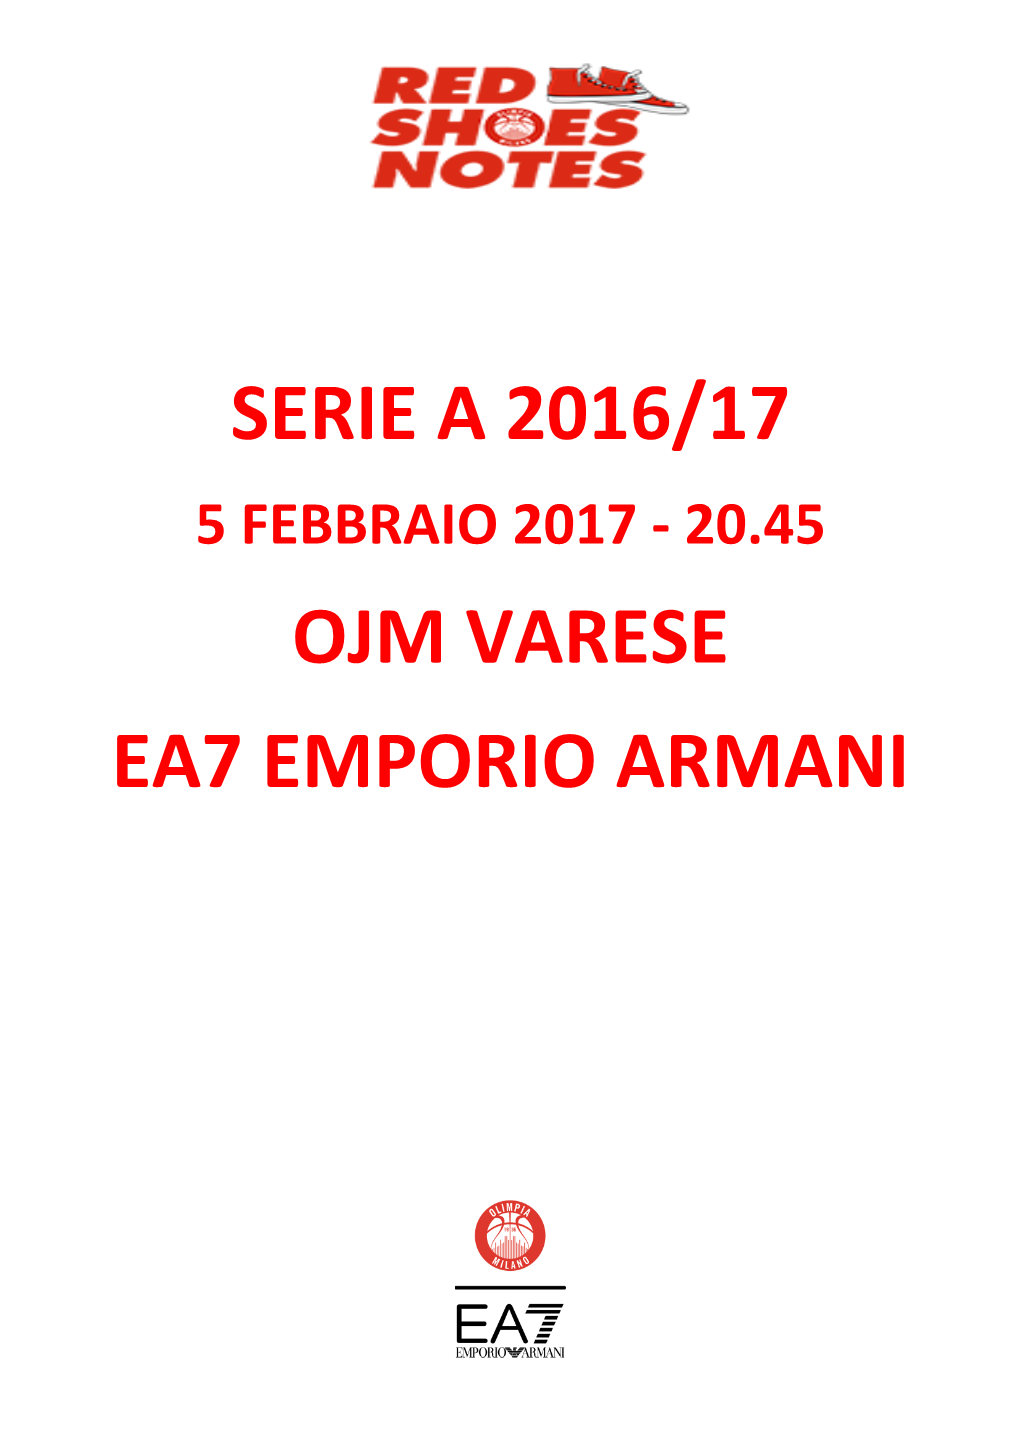 Serie a 2016/17 Ojm Varese Ea7 Emporio